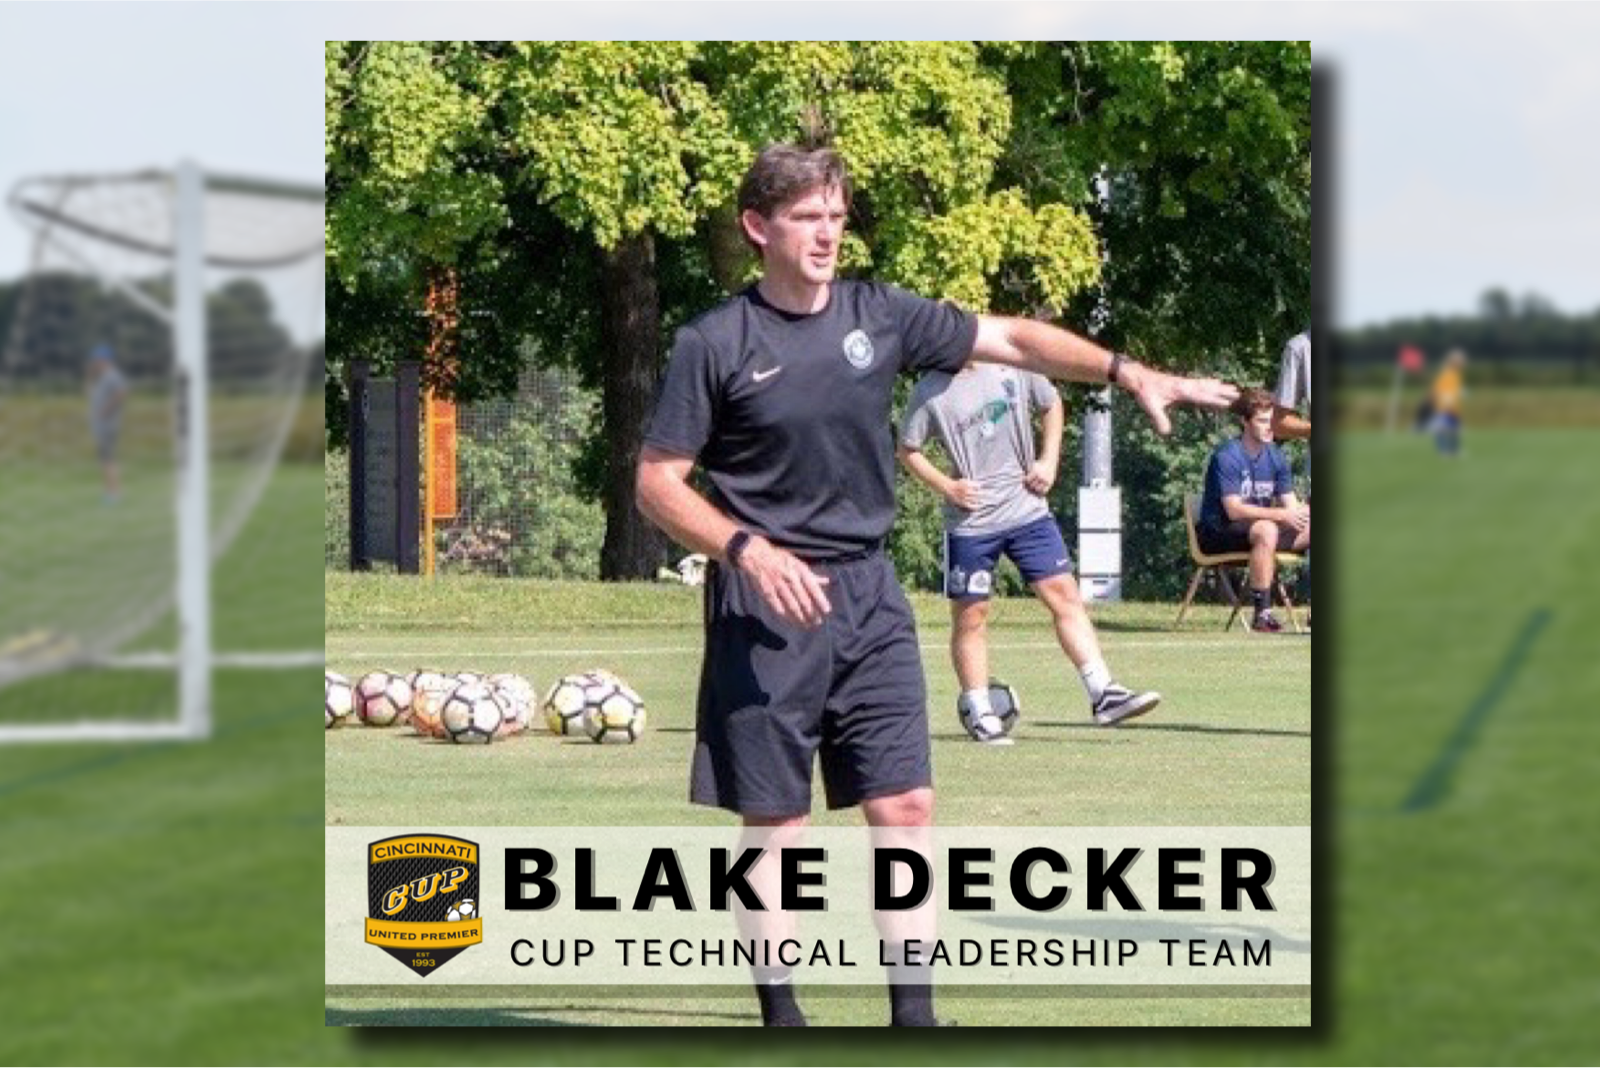 Blake Decker hired to CUP Leadership Team